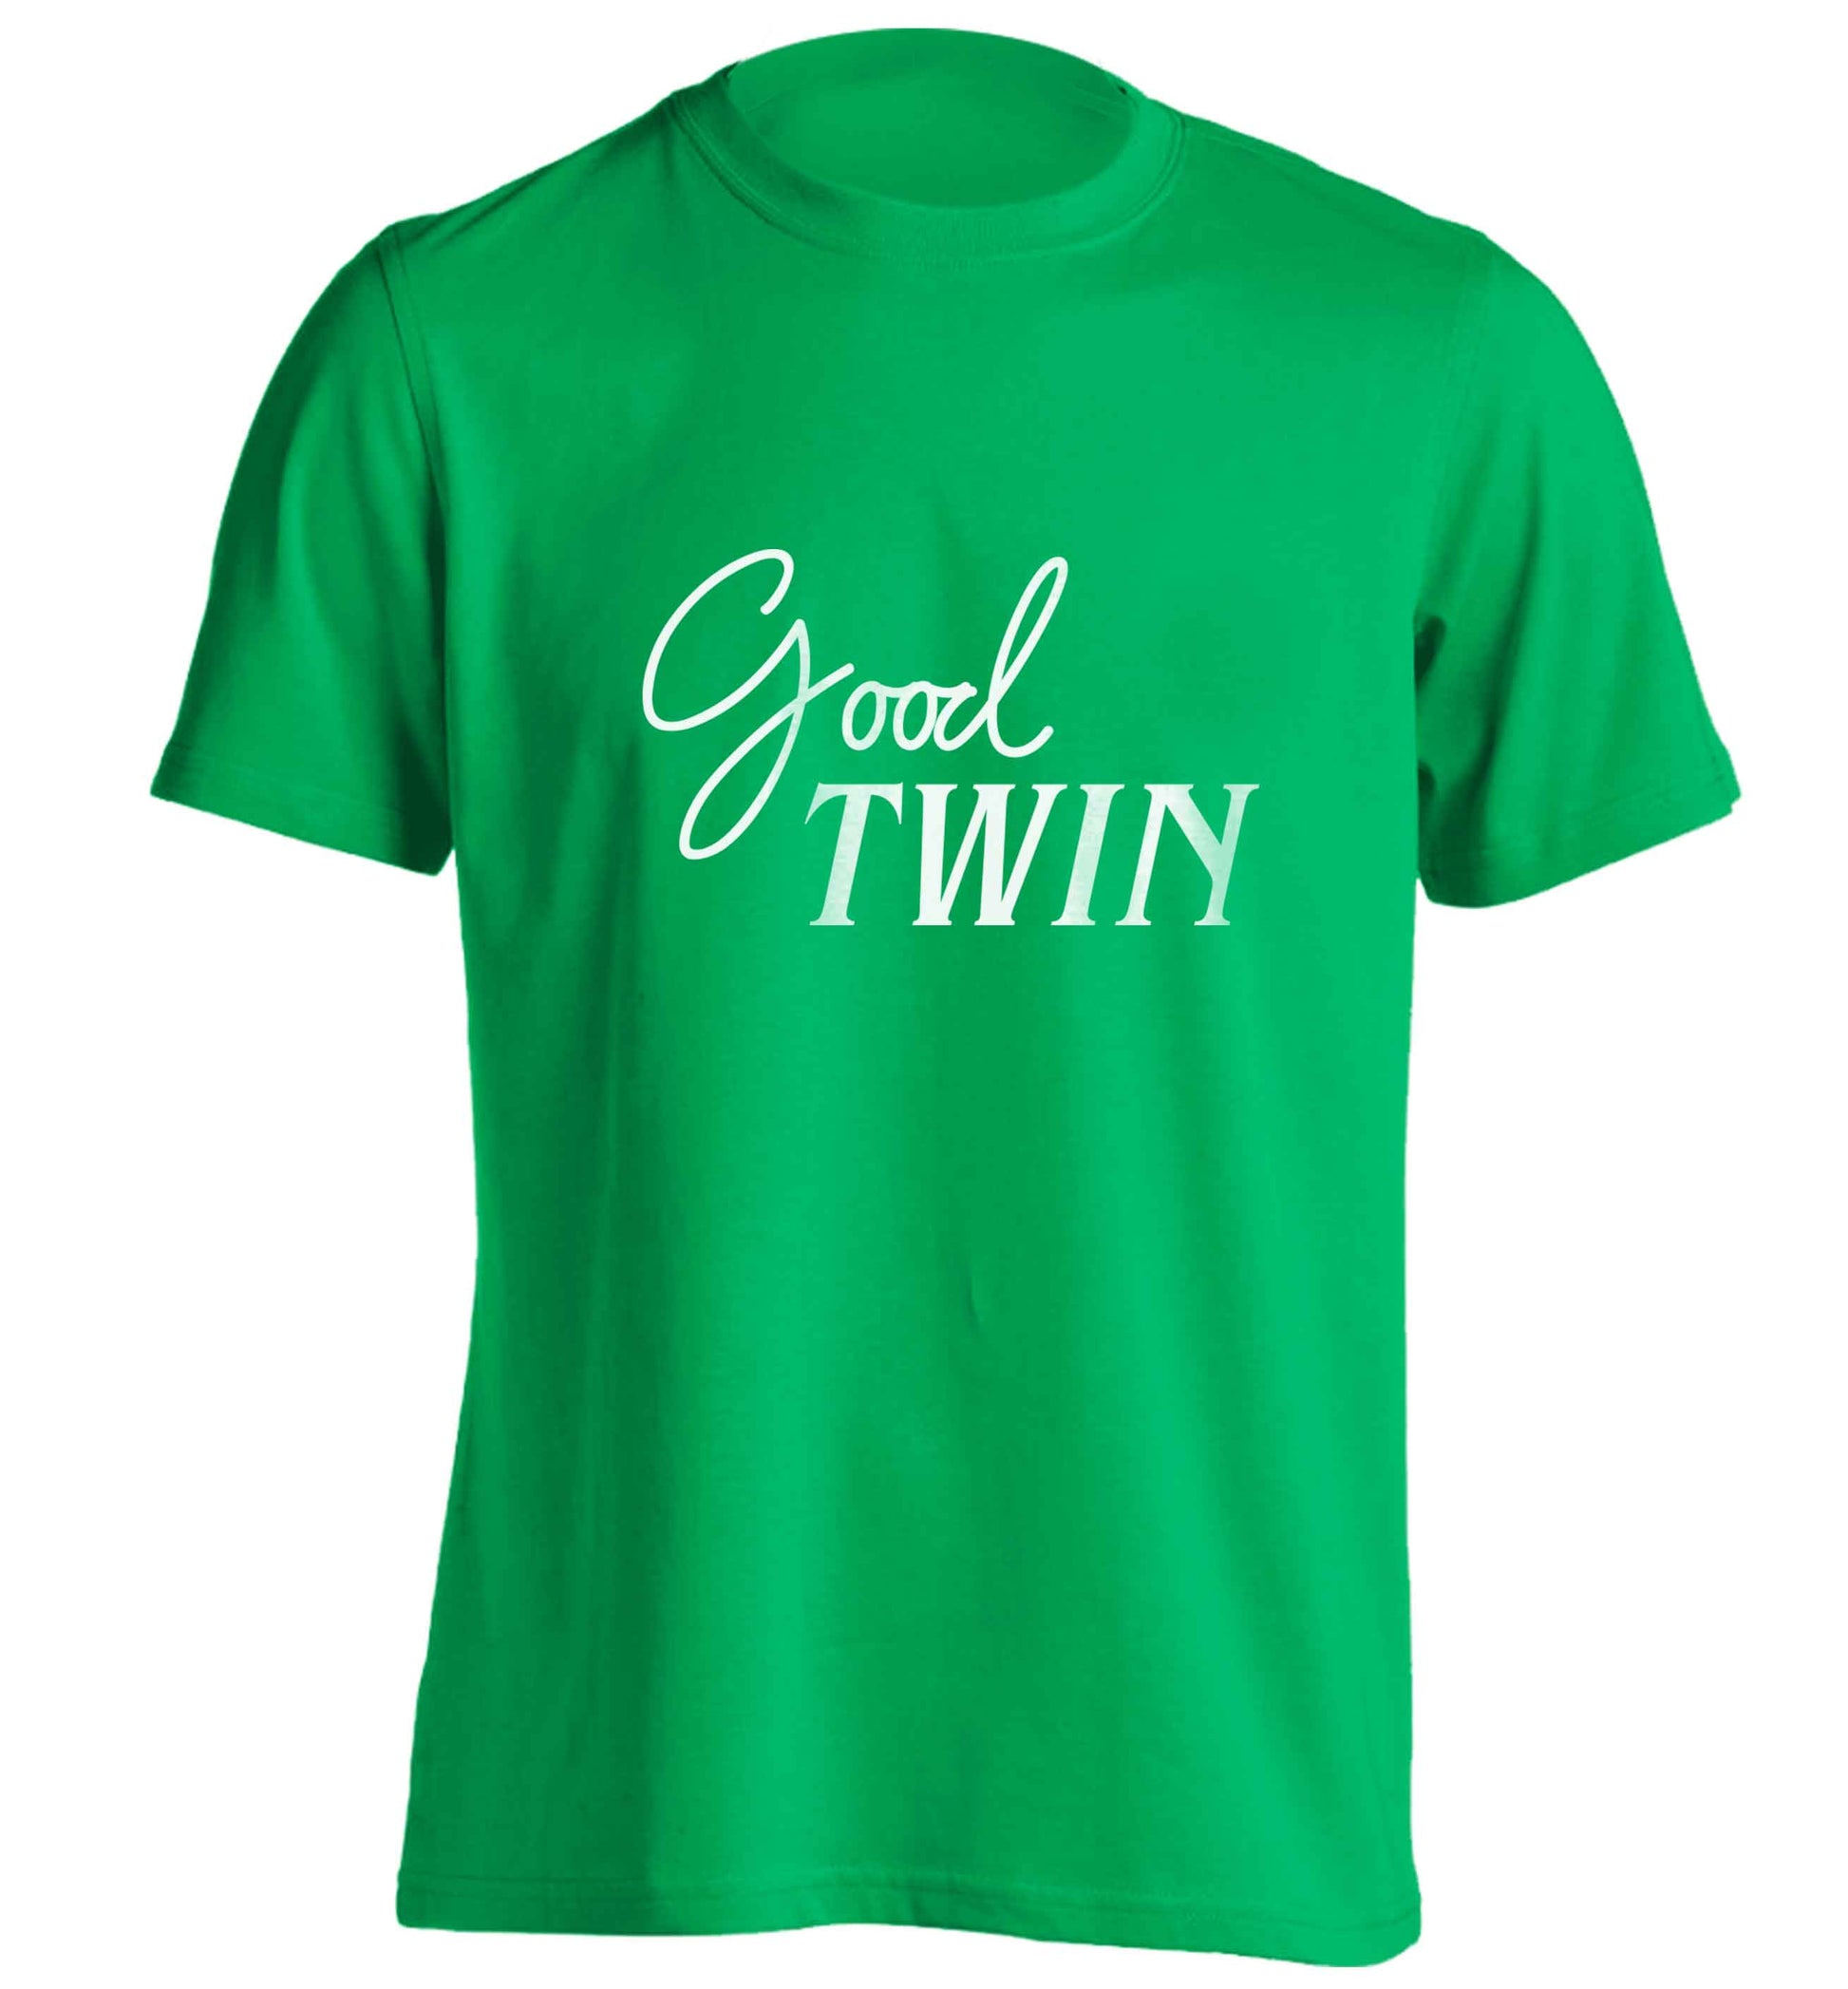 Good twin adults unisex green Tshirt 2XL